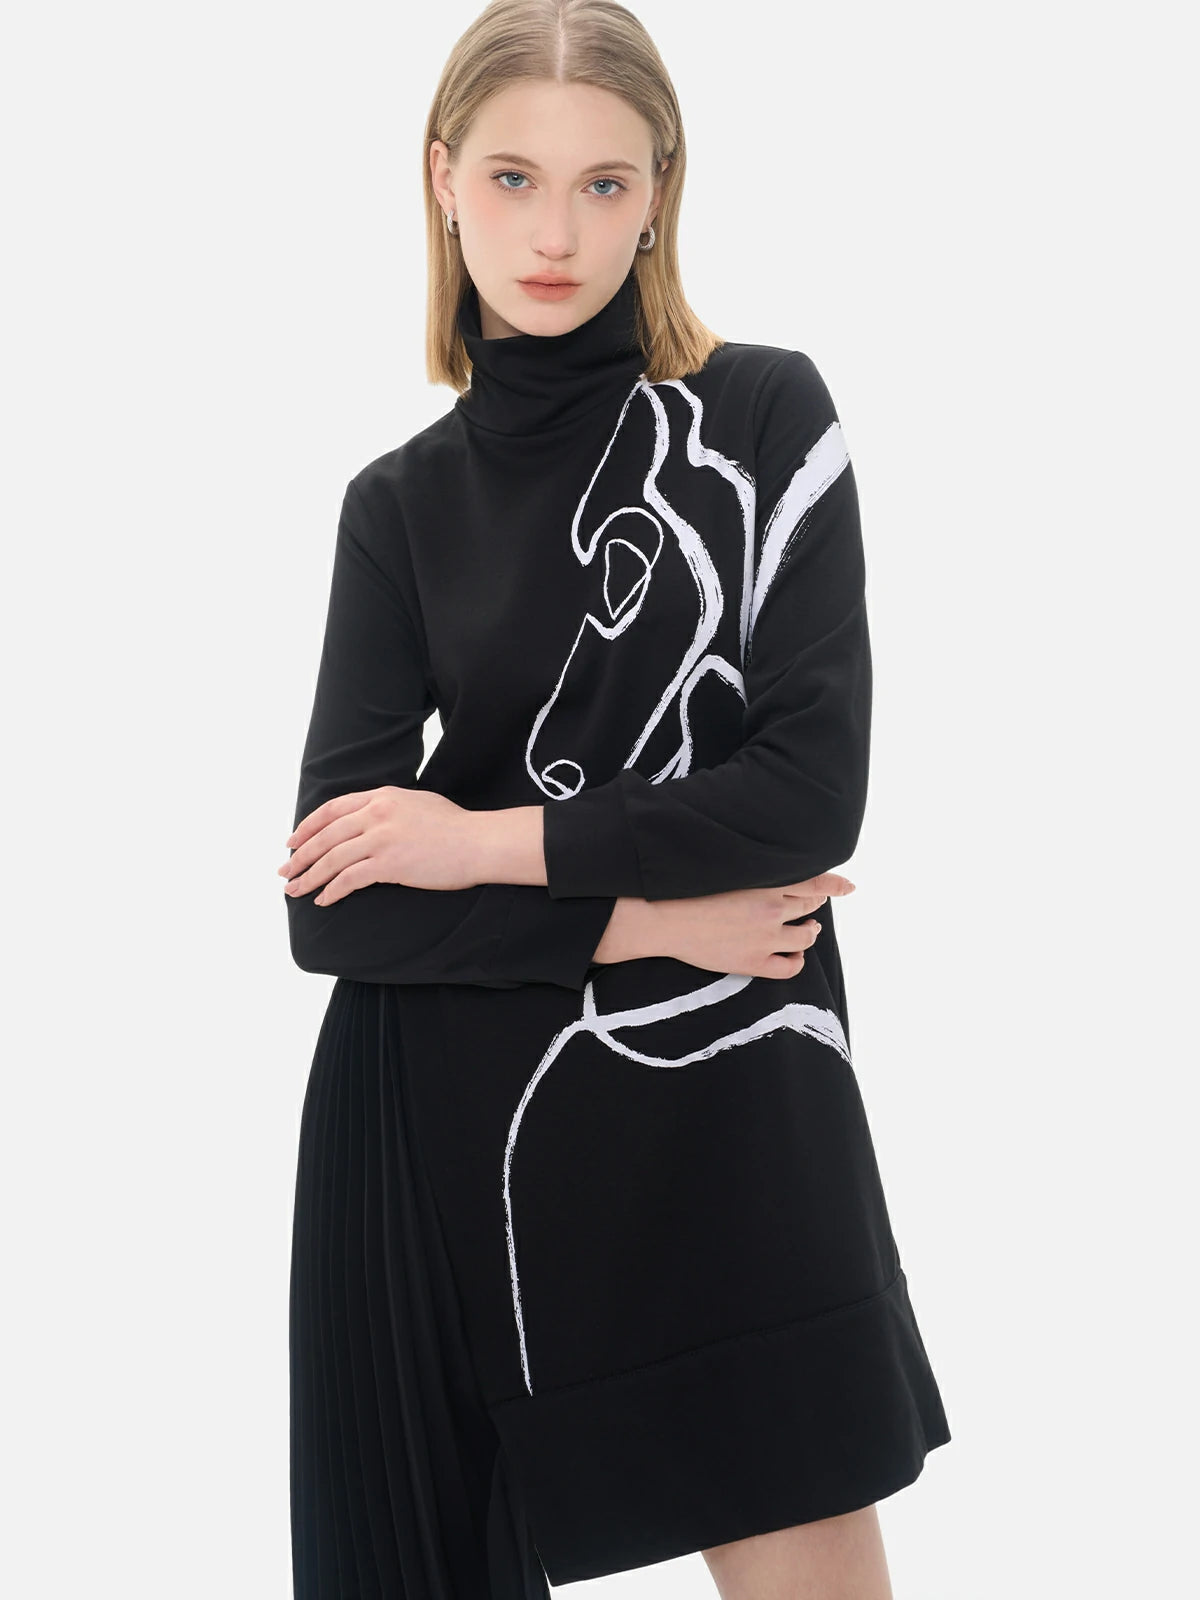 Versatile occasion wear: A high-neck dress with an abstract figure print and an asymmetrical hem.